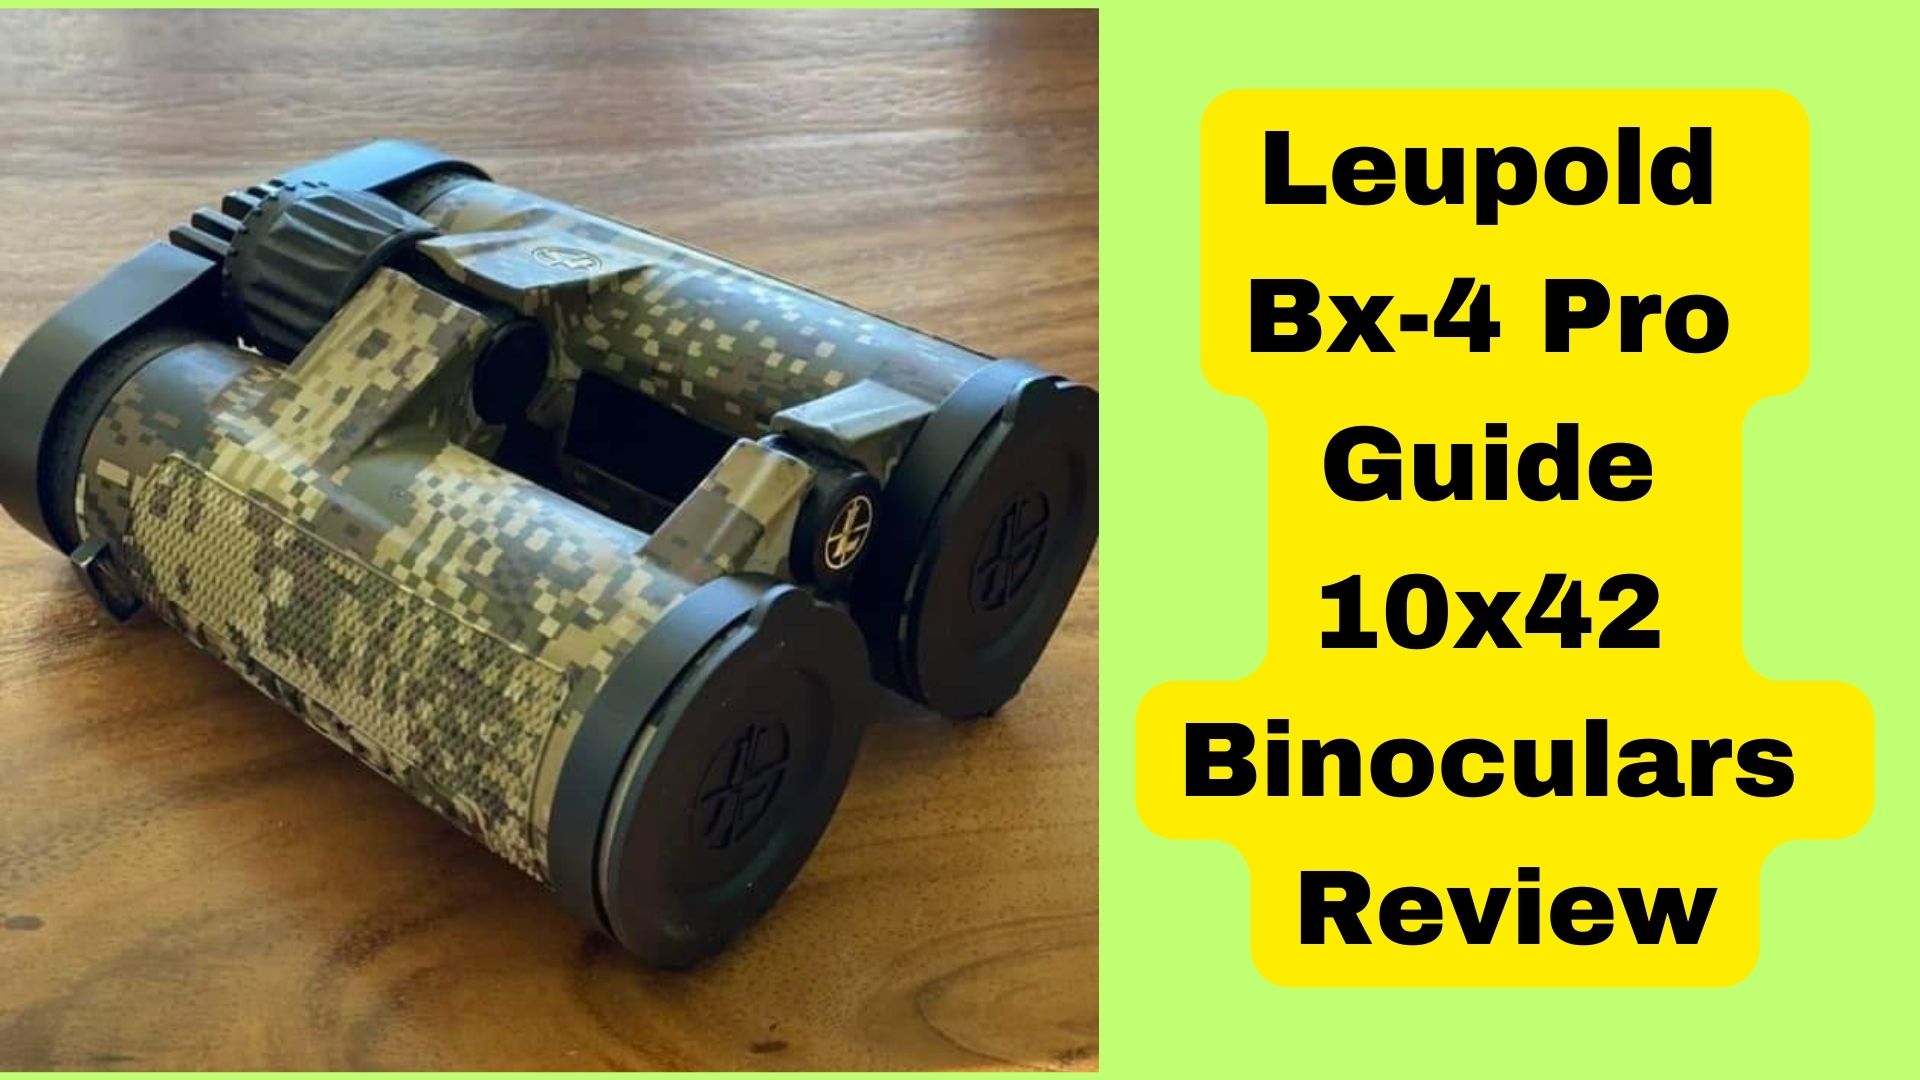 Leupold BX-4 Pro Guide 10x42 Binocuars Review